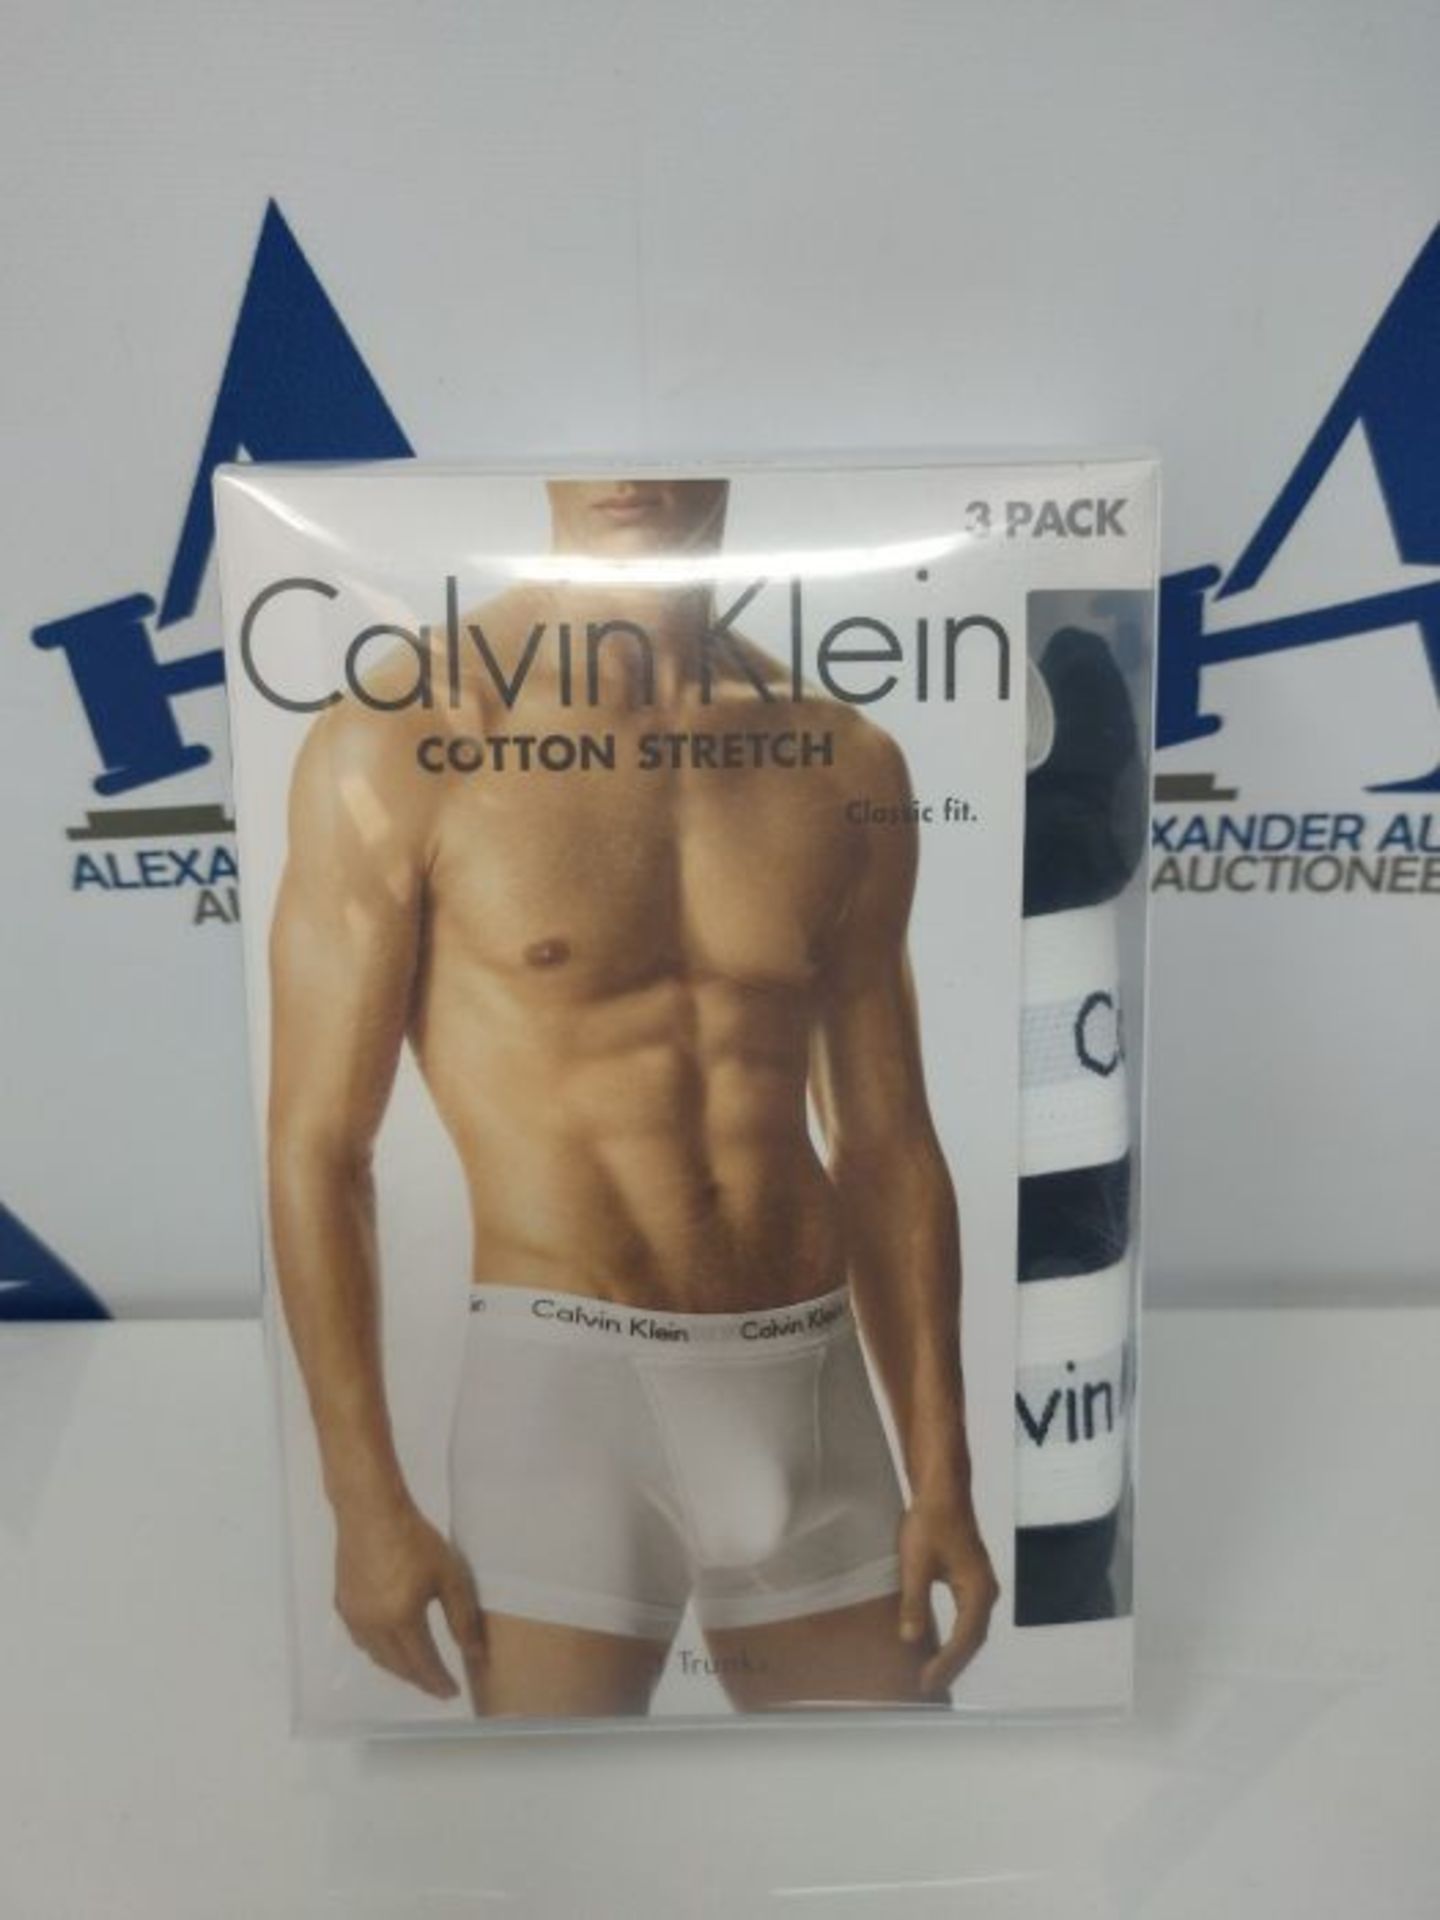 Calvin Klein Men's 3 Pack Trunks-Cotton Stretch Boxers, Black, M - Image 2 of 3